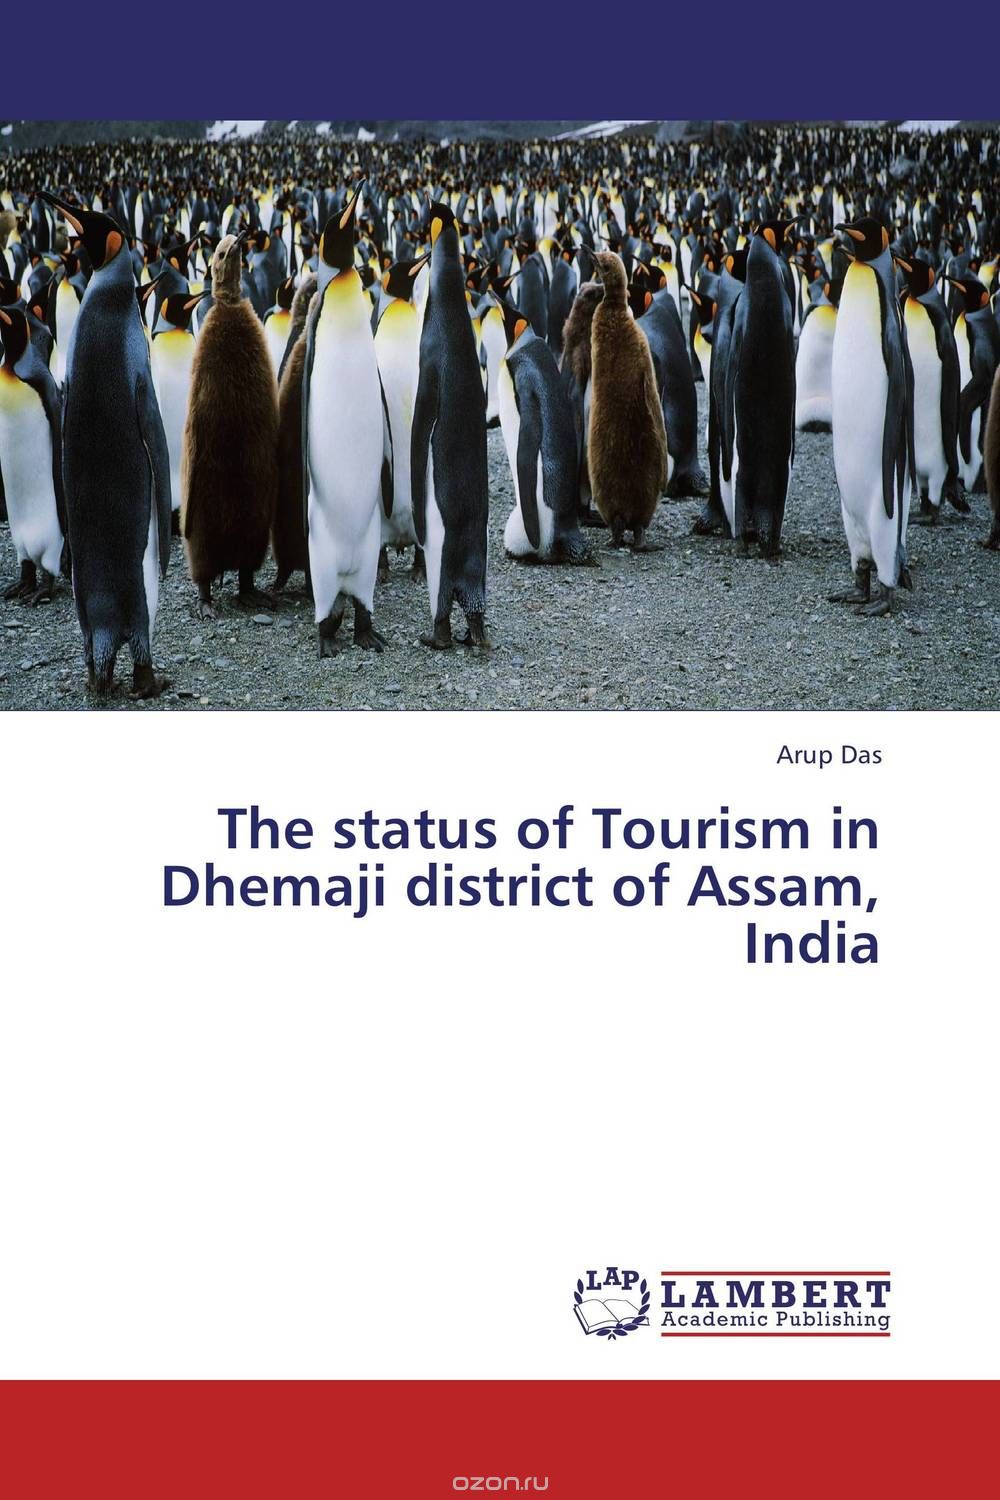 Скачать книгу "The status of Tourism in Dhemaji district of Assam, India"